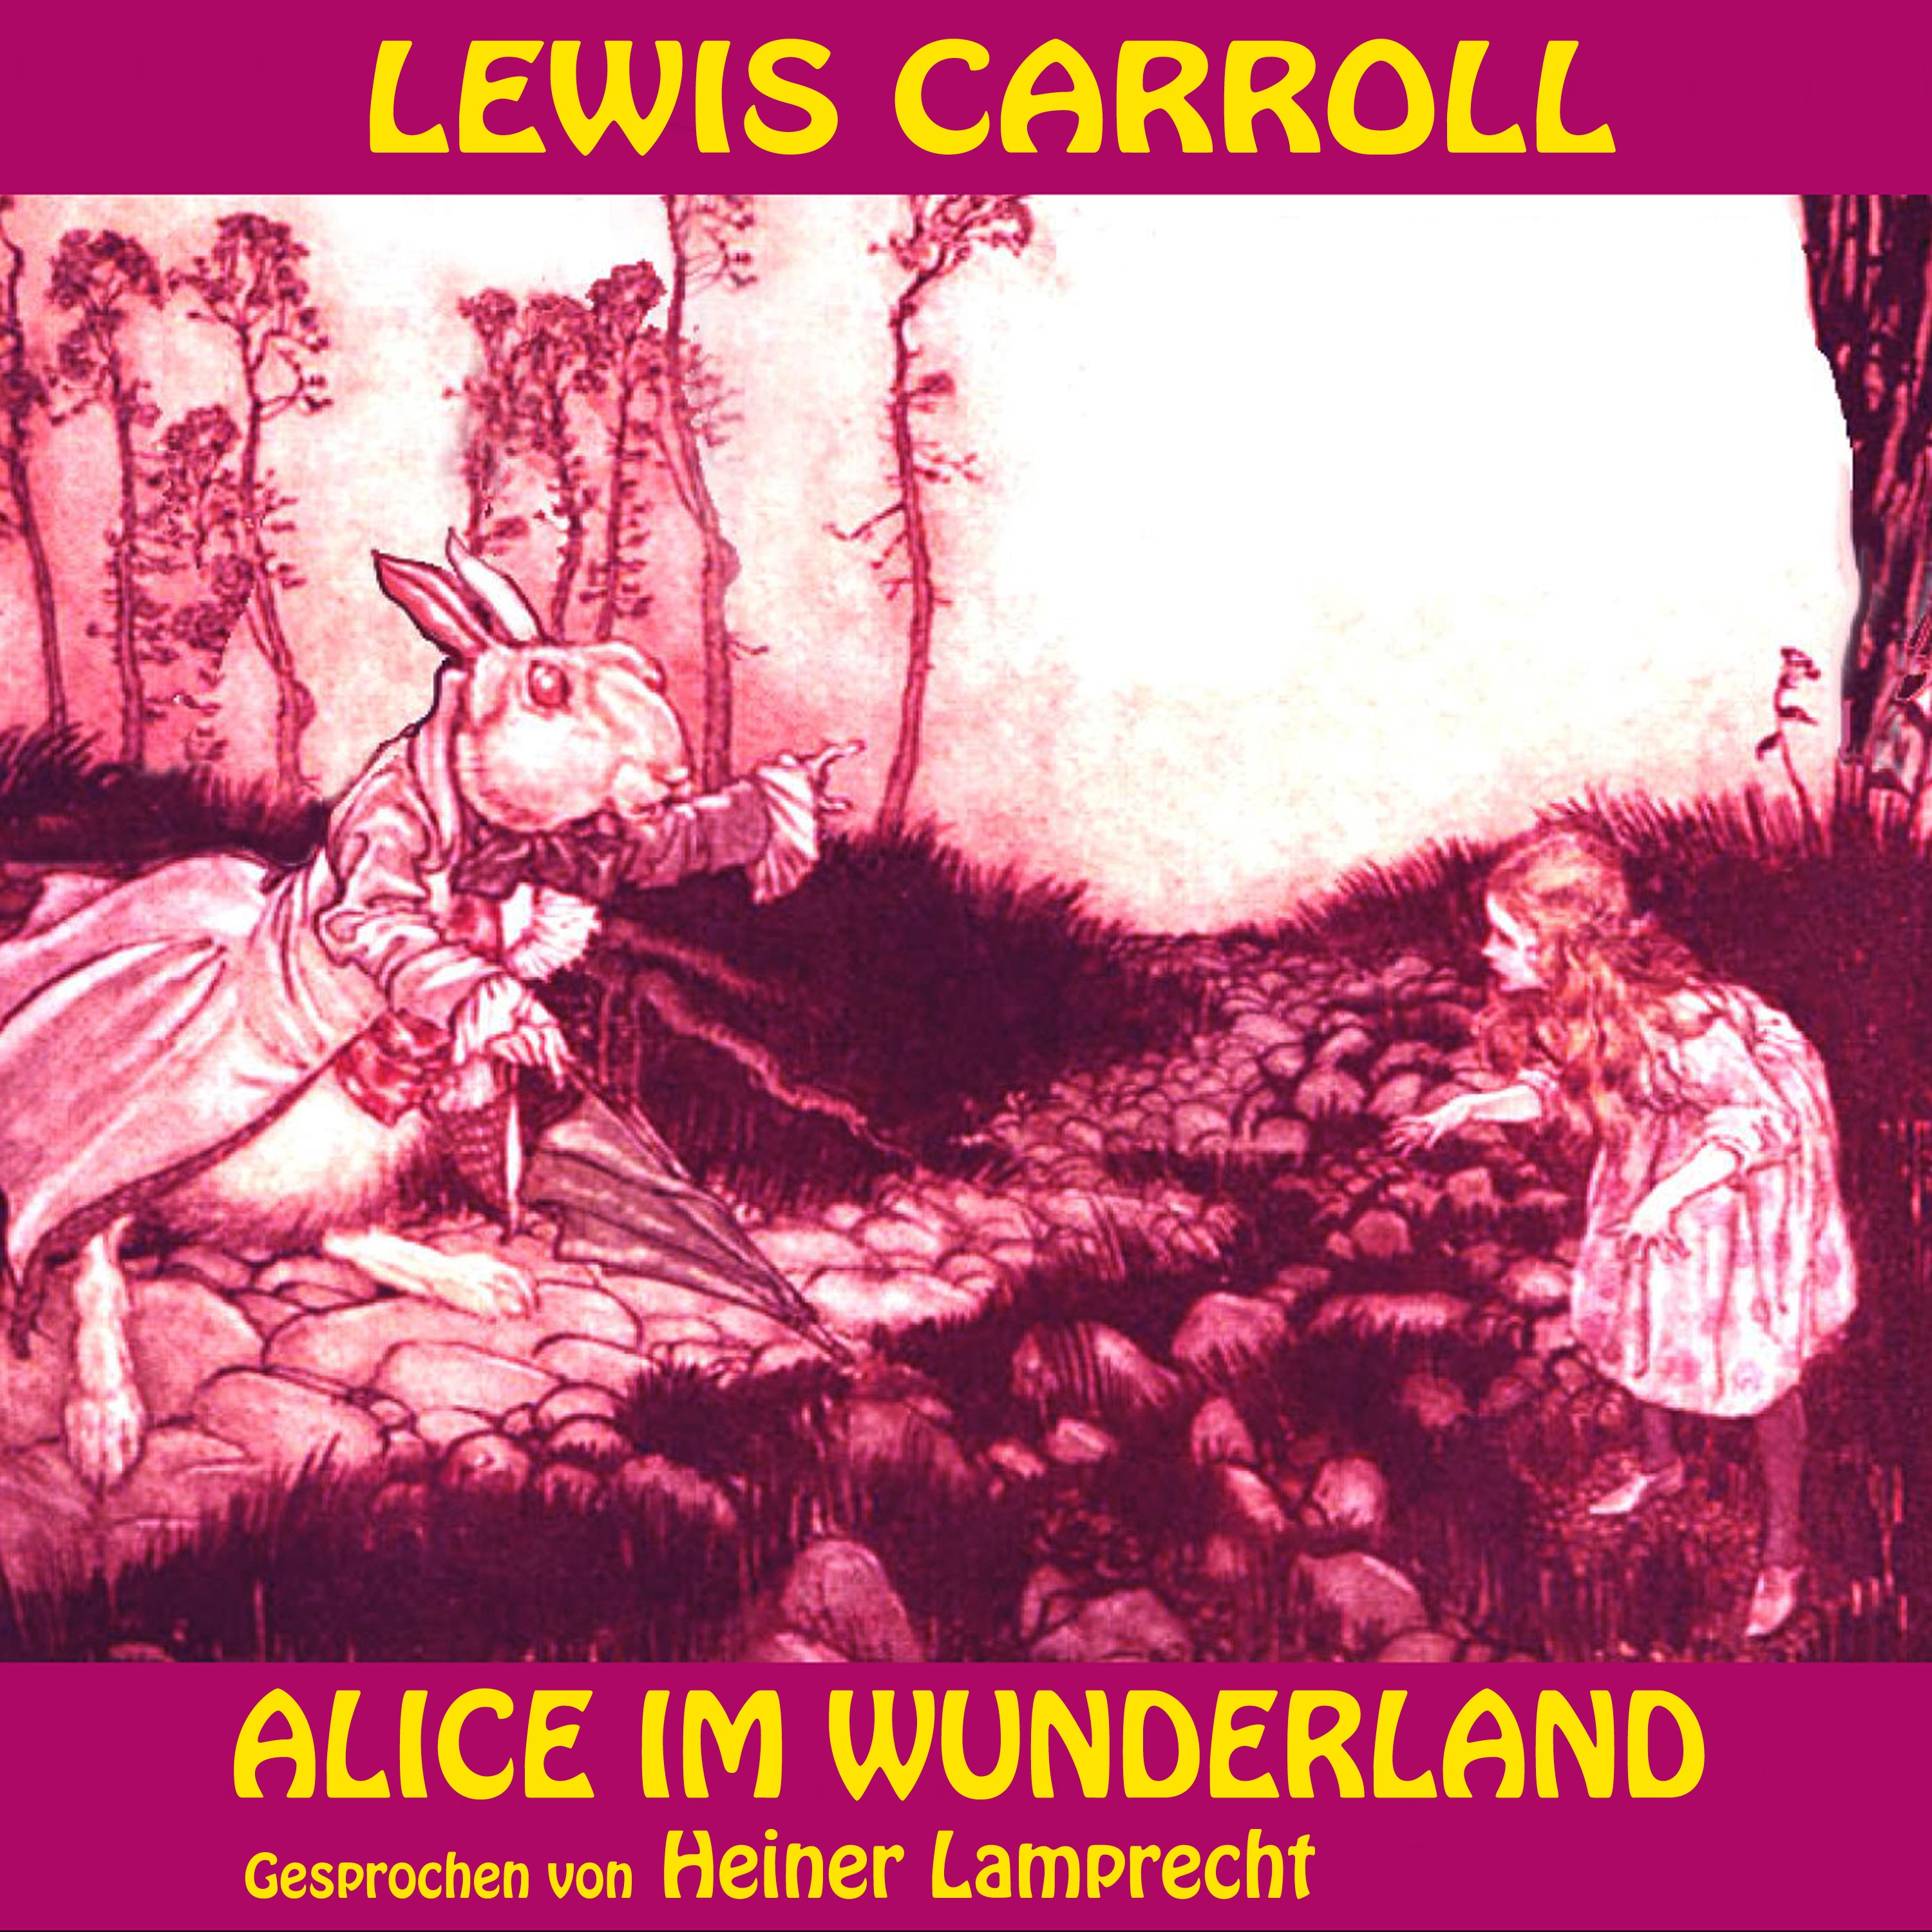 Kapitel 11: Alice im Wunderland (Teil 9)